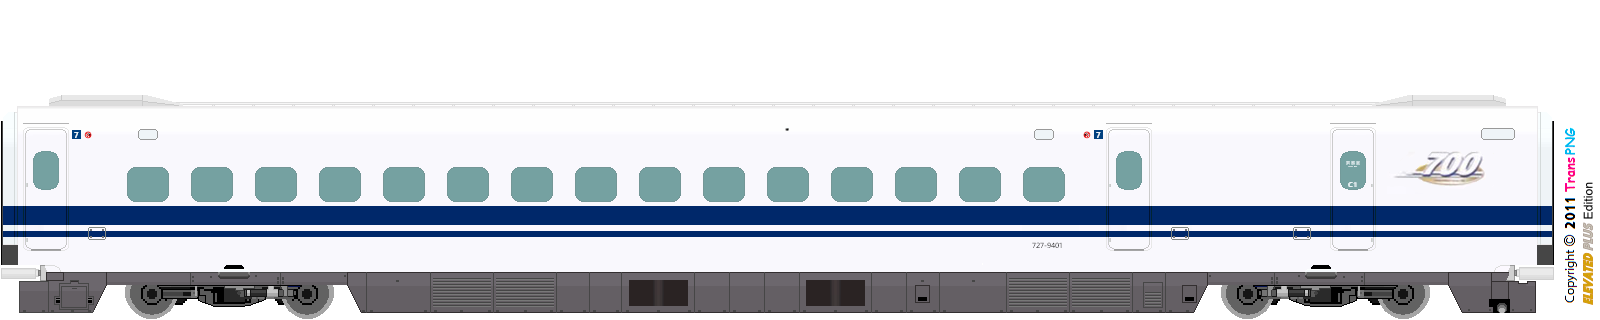 [9013] Central Japan Railway 52287585588_b70150c741_o